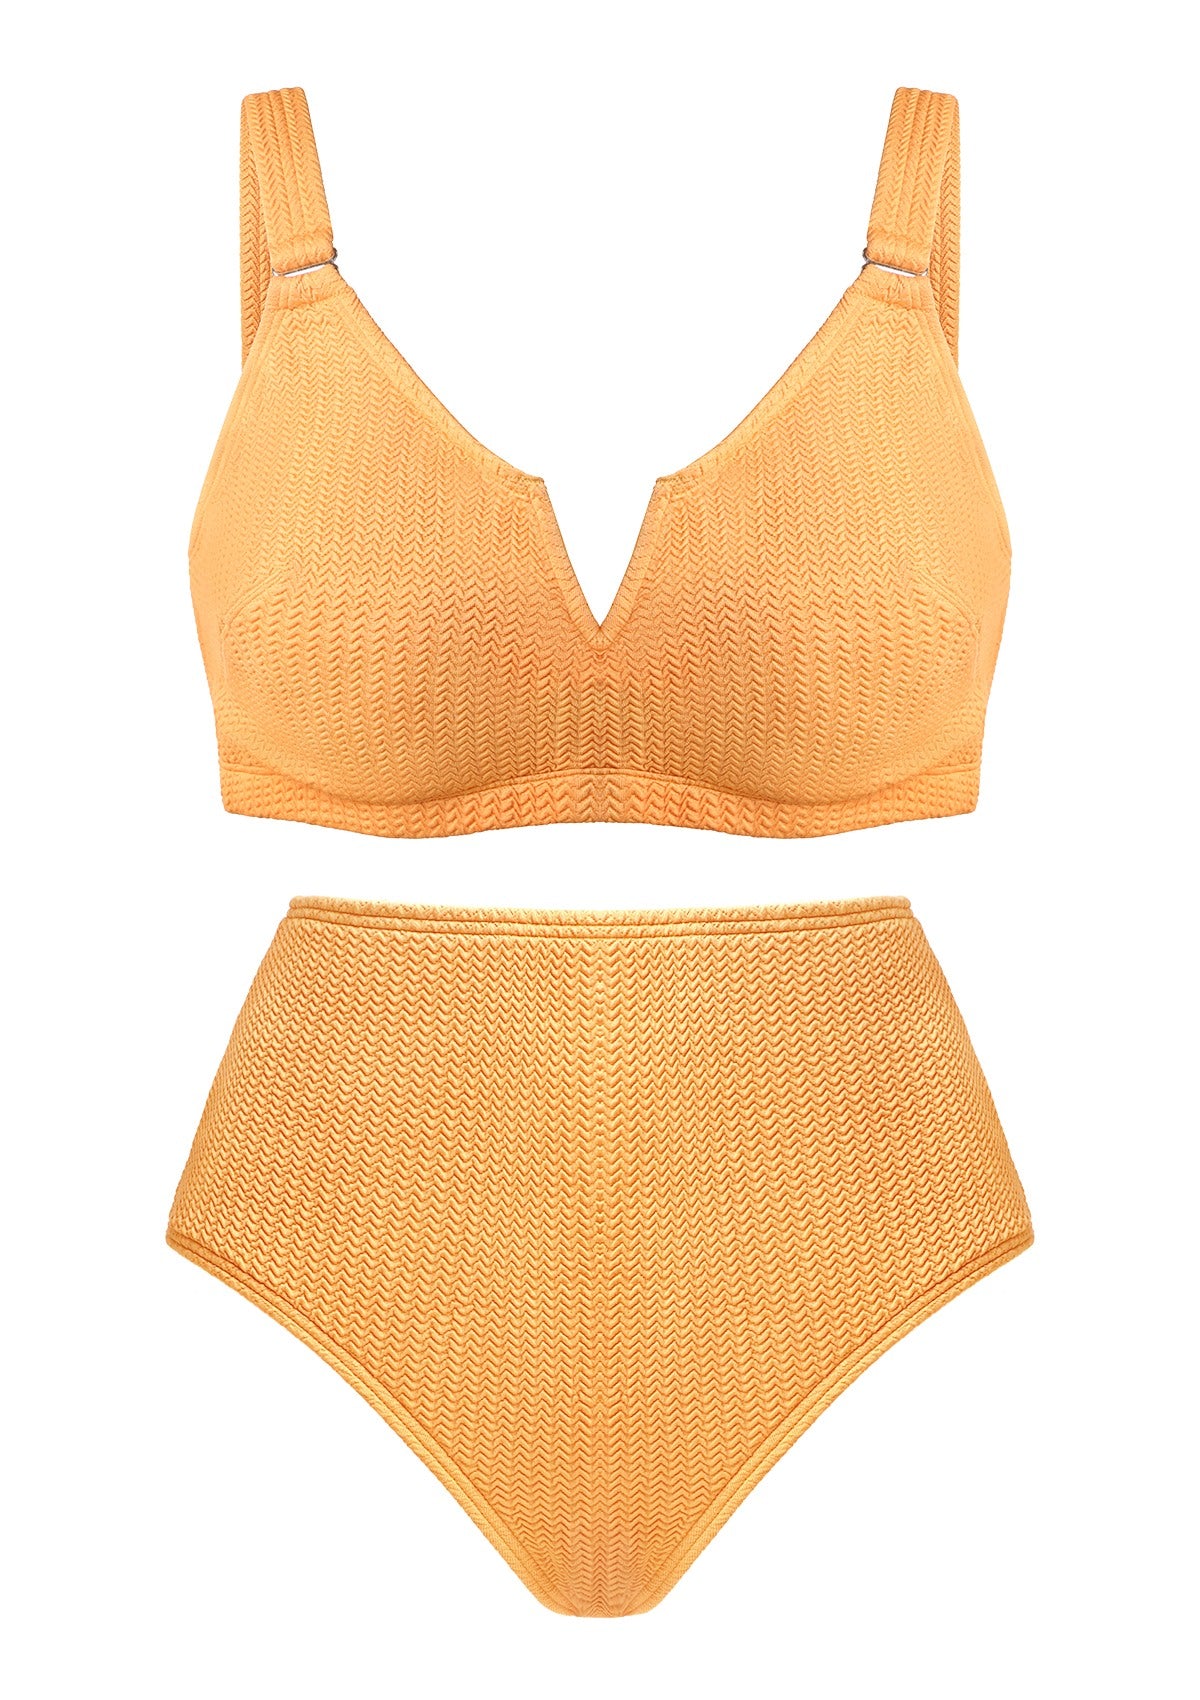 V-wire Plunge Textured Two-piece Bikini Set - 3XL / Peachy Sunrise